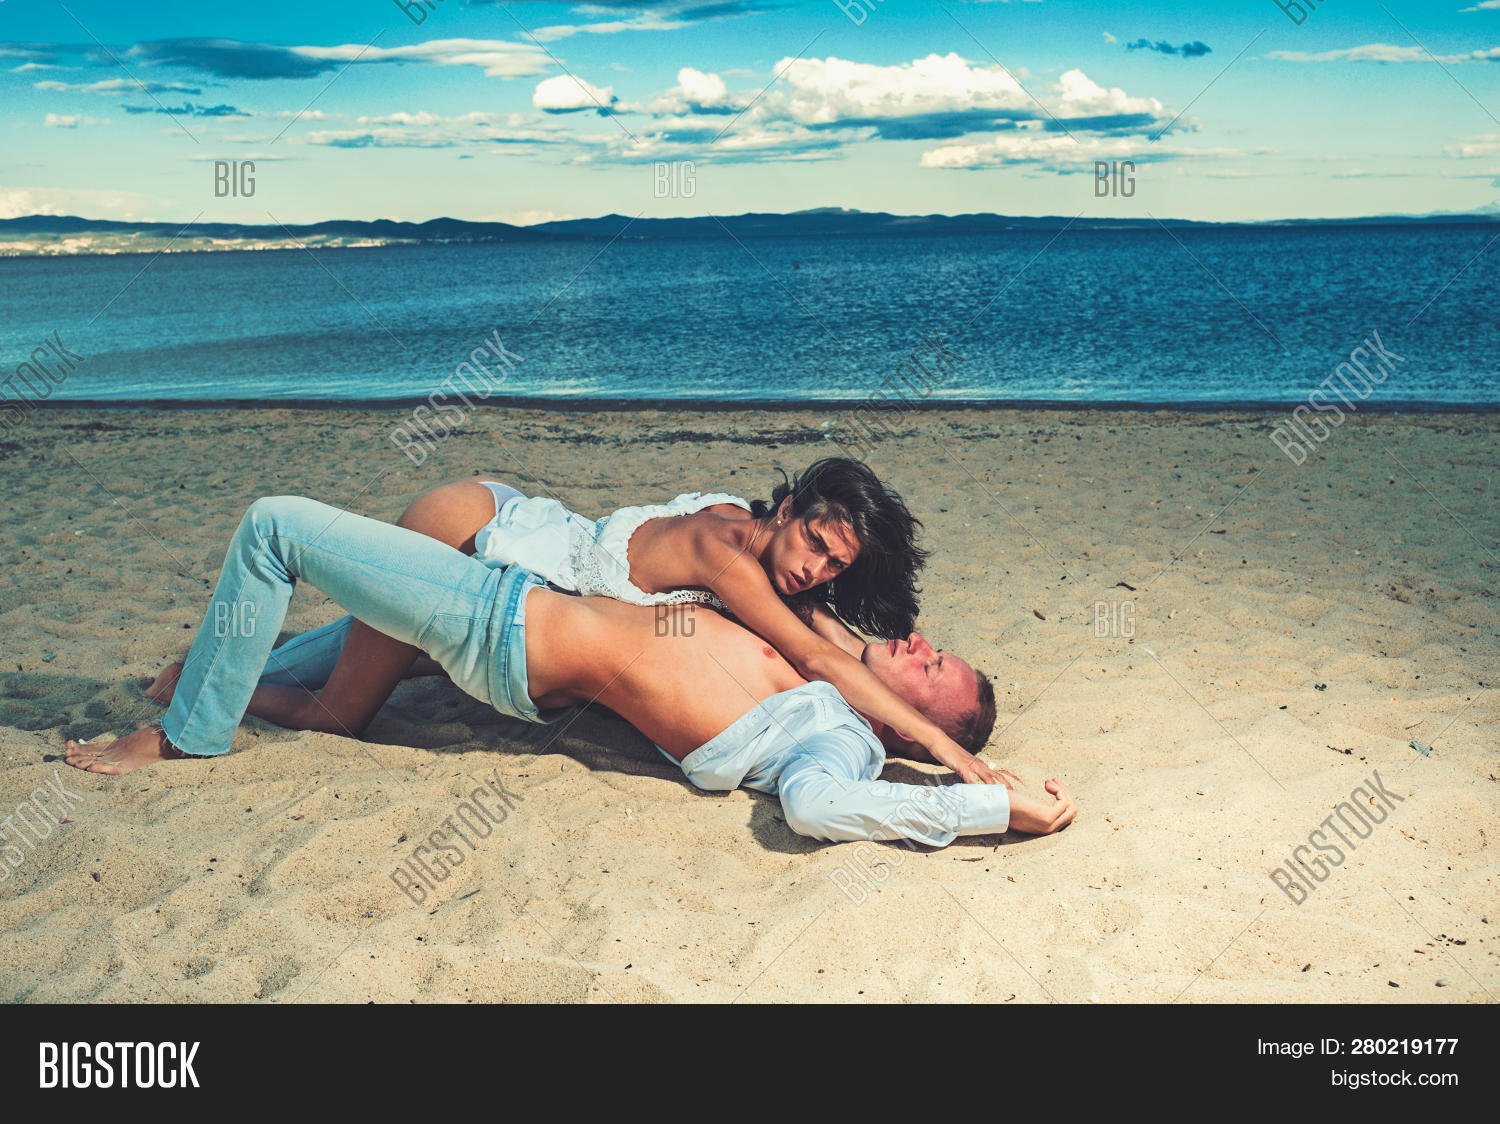 clinton fischer recommends Romantic Sex On The Beach